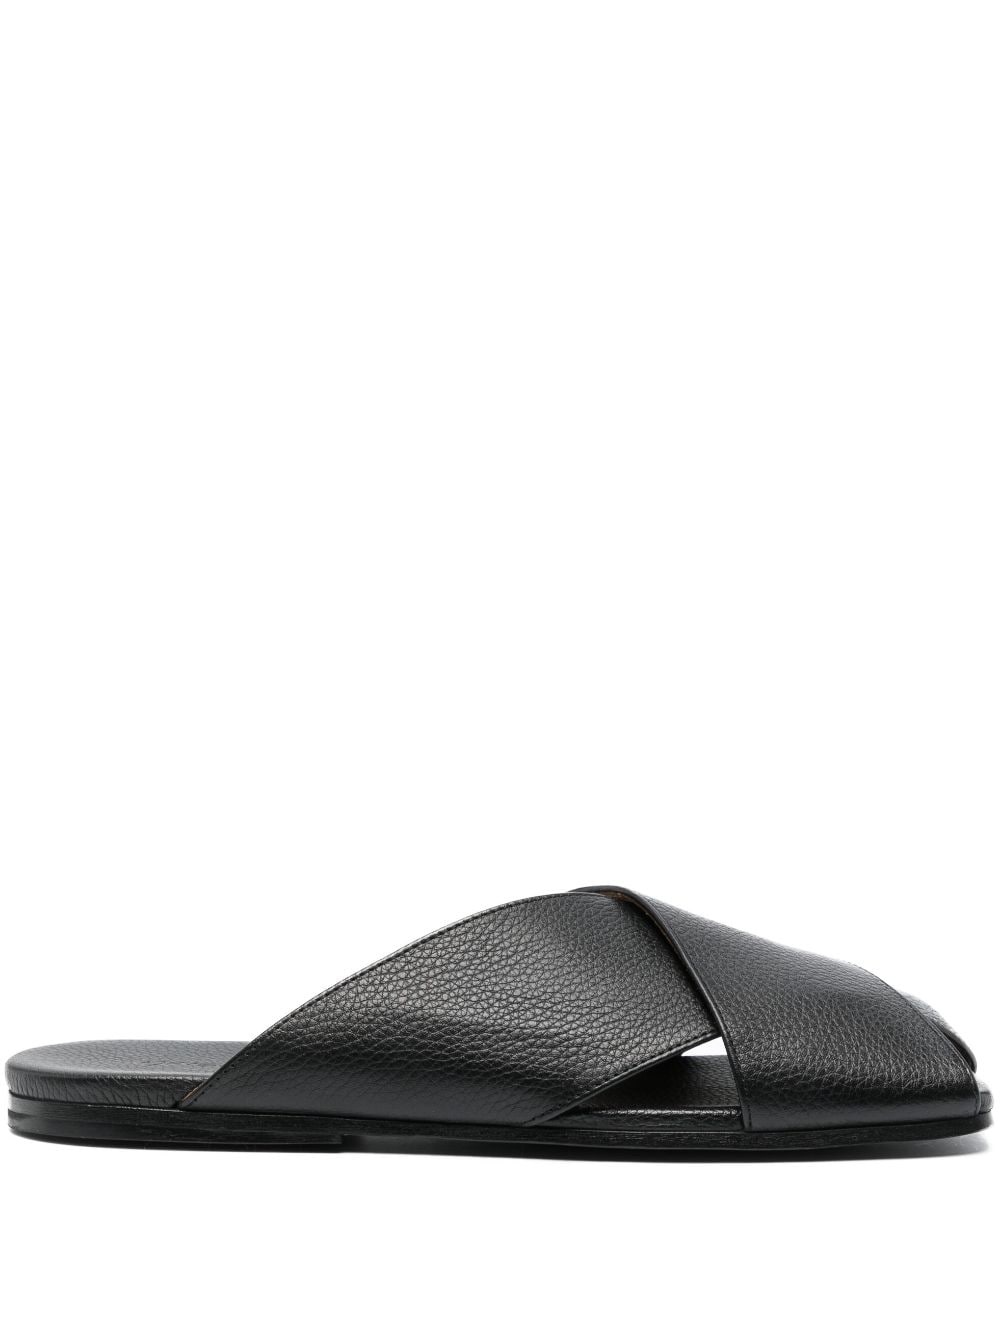 Marsèll Flat Leather Sandals In Black